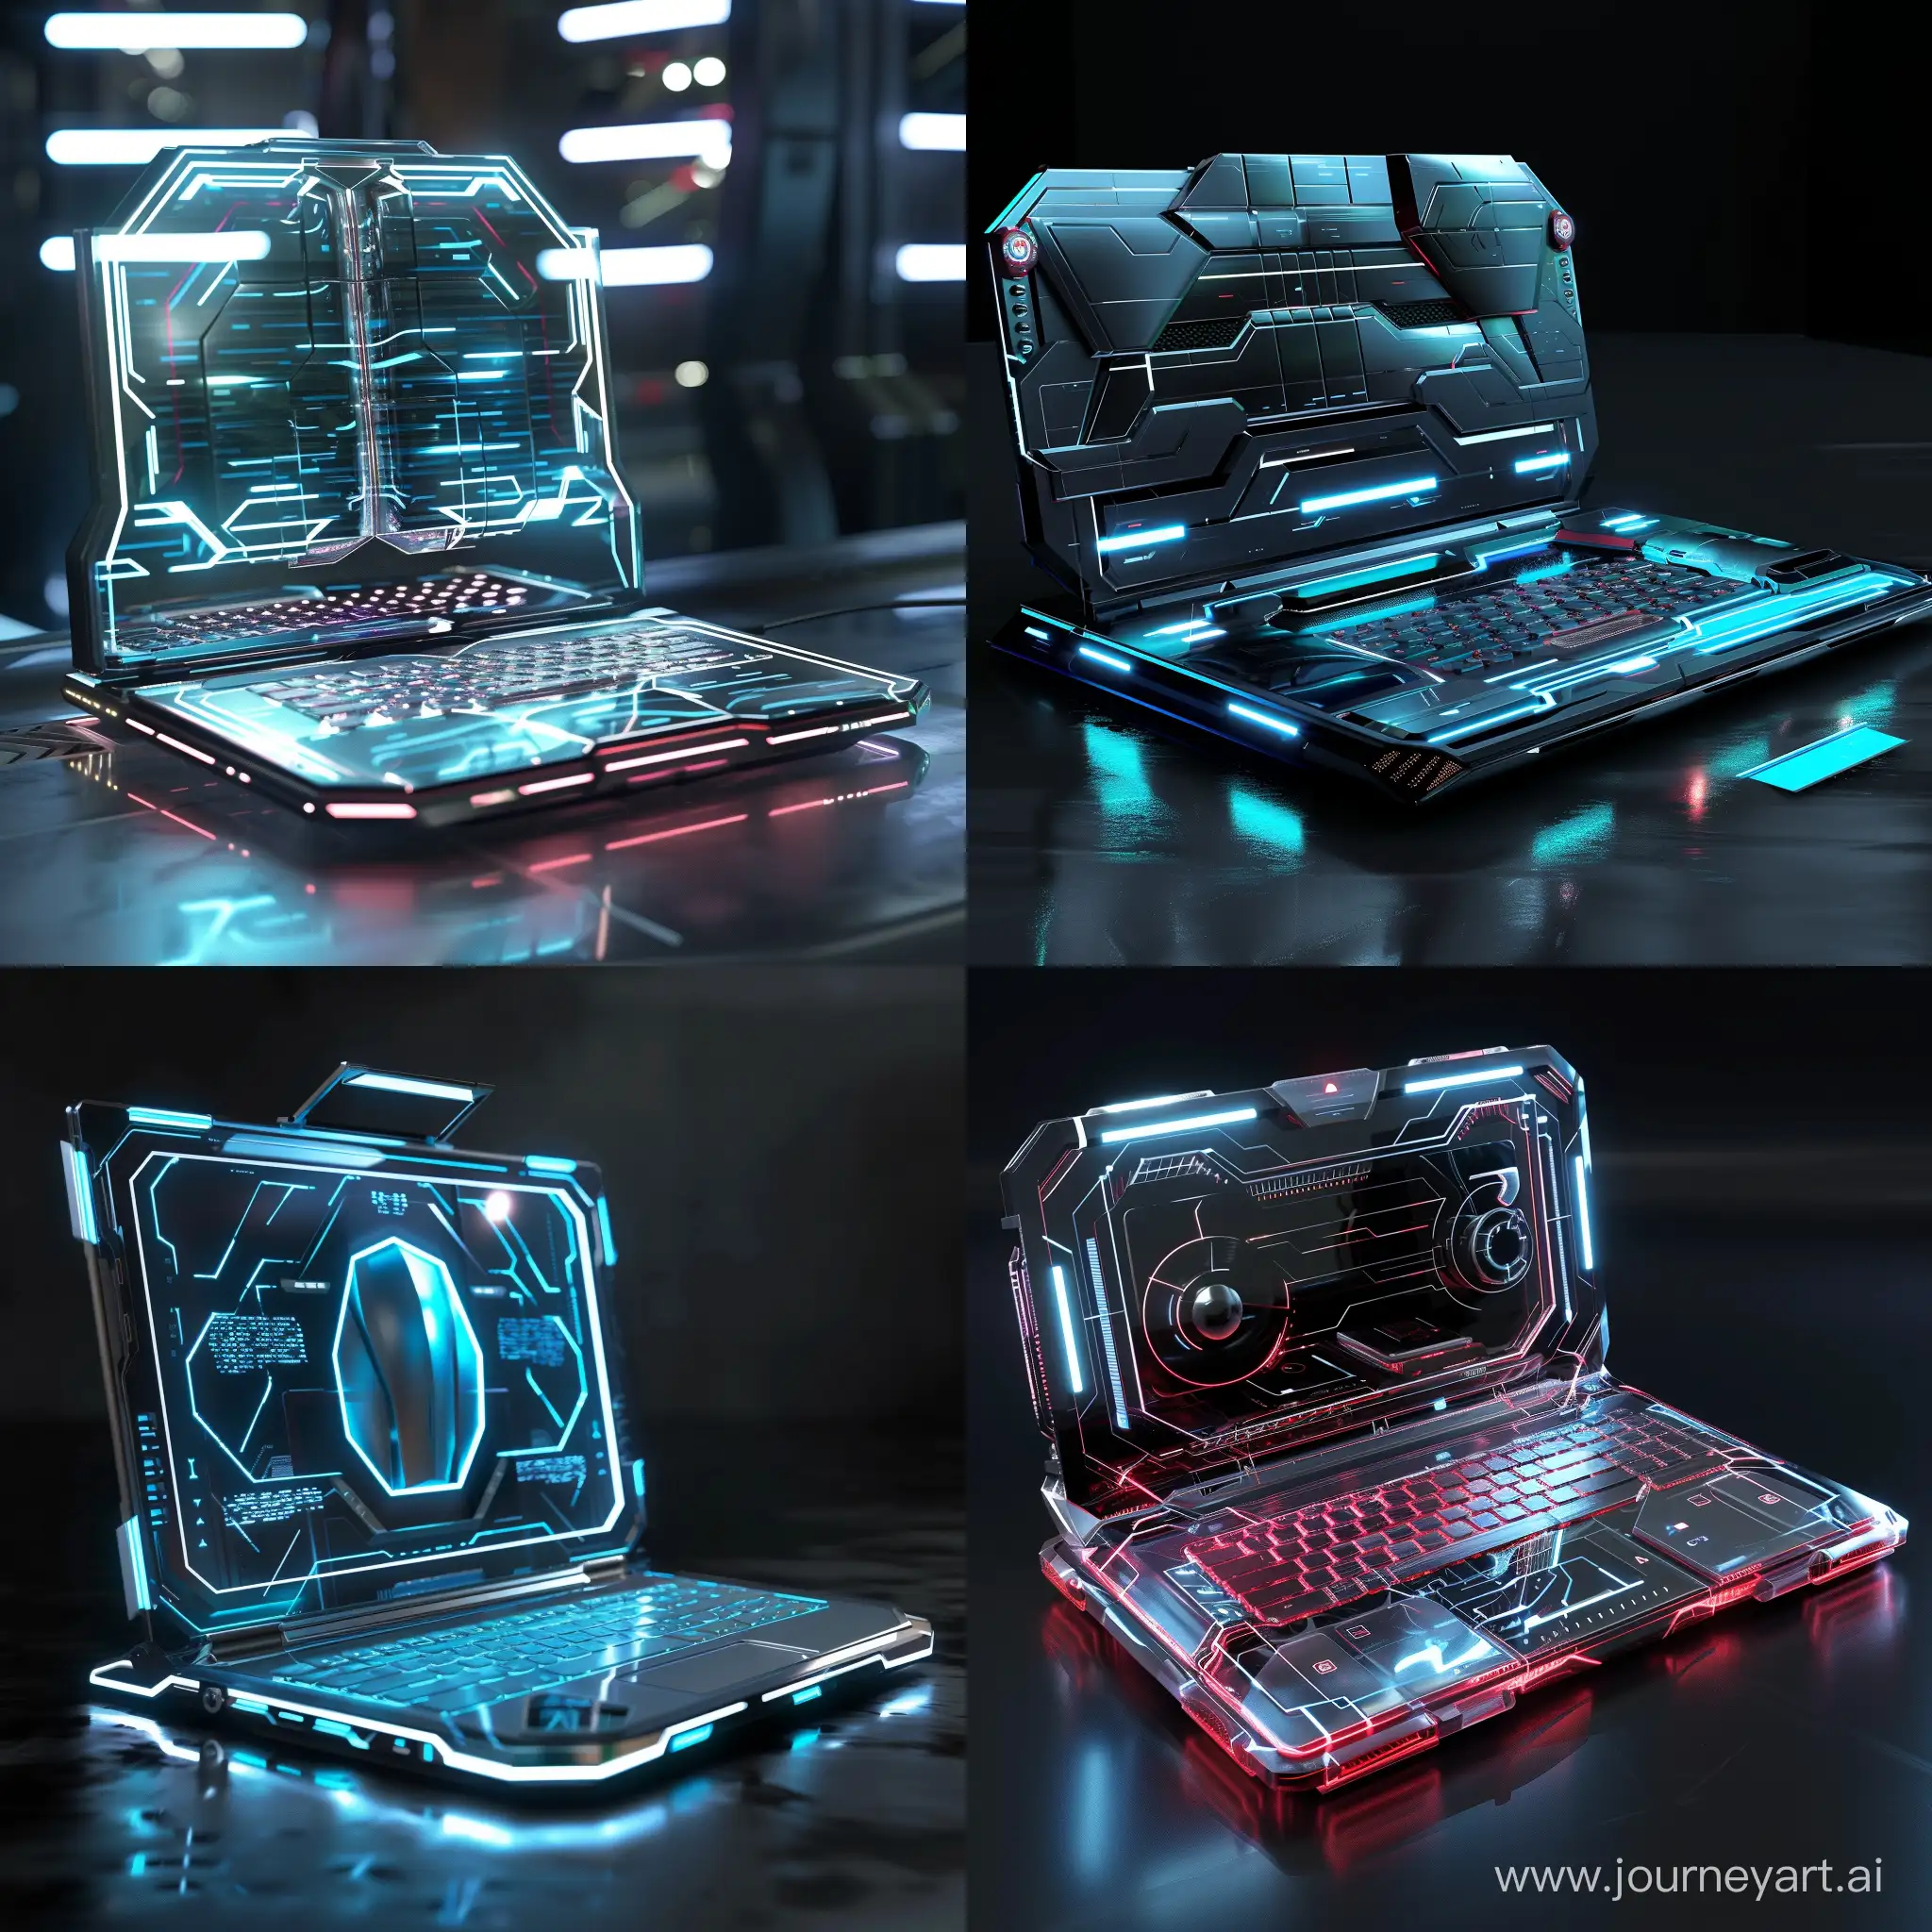 Futuristic laptop, made of high tech, octane render